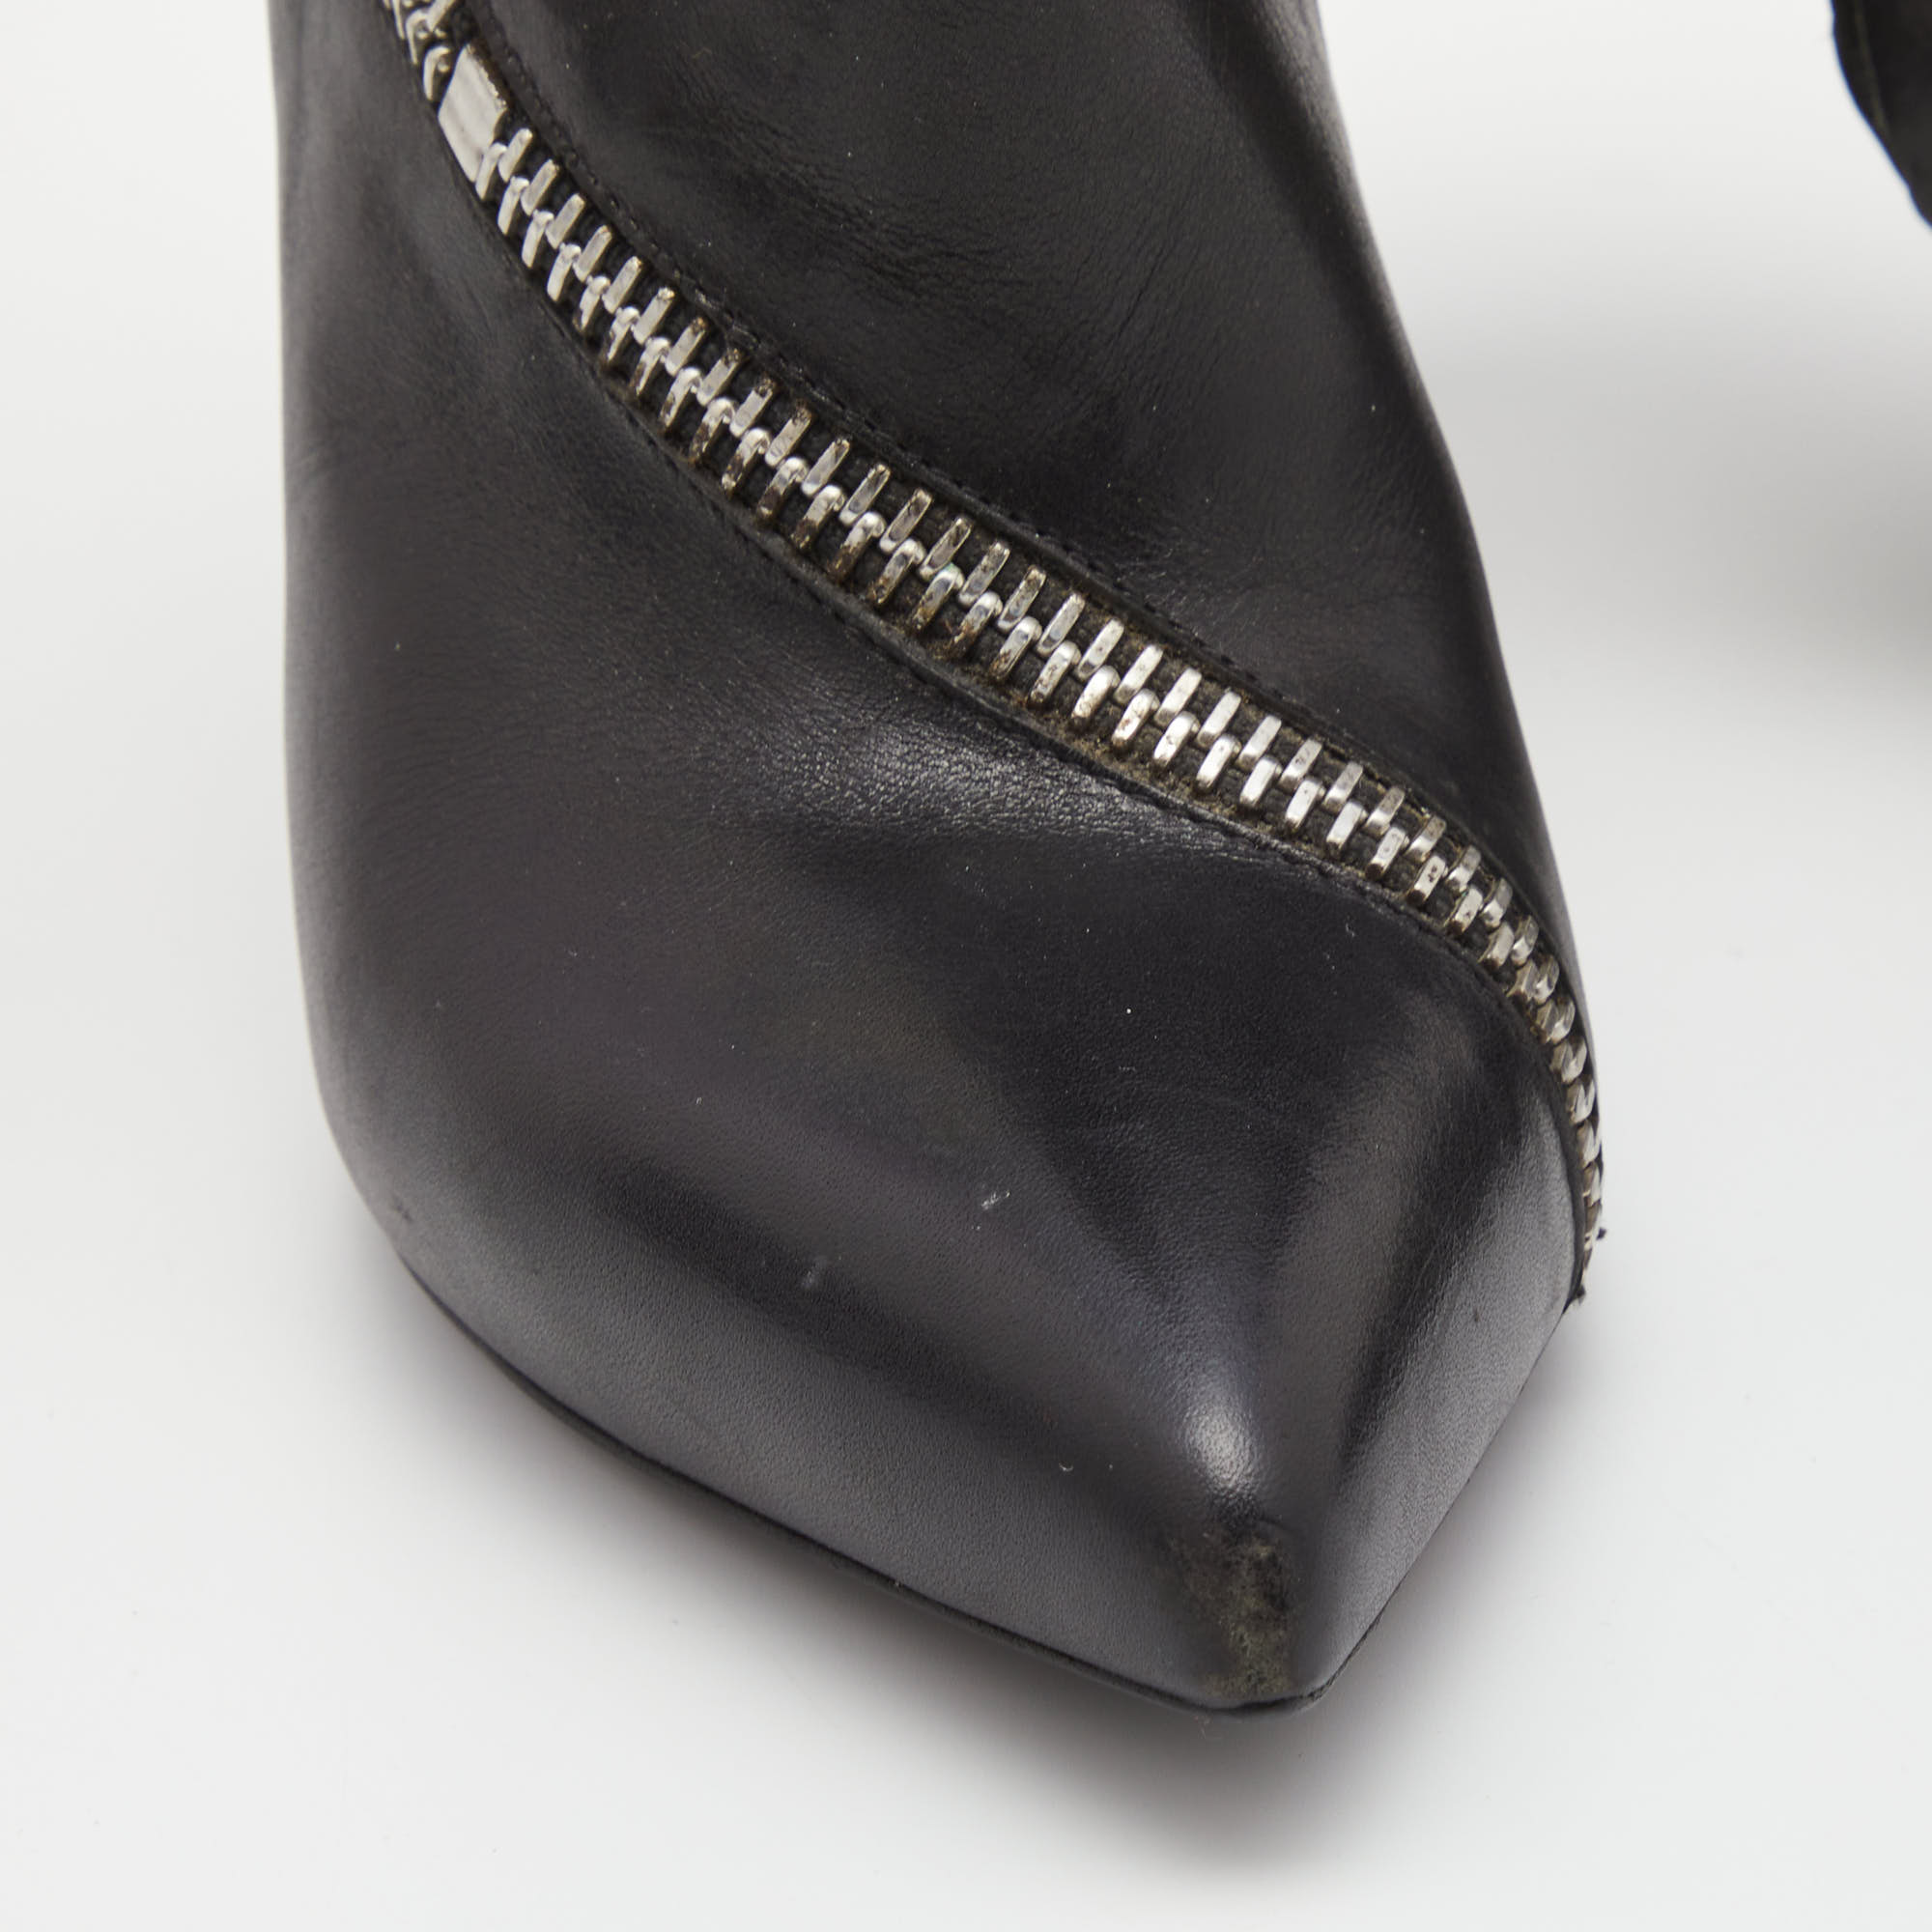 Saint Laurent Black/White Leather Color Block Ankle Booties Size 36